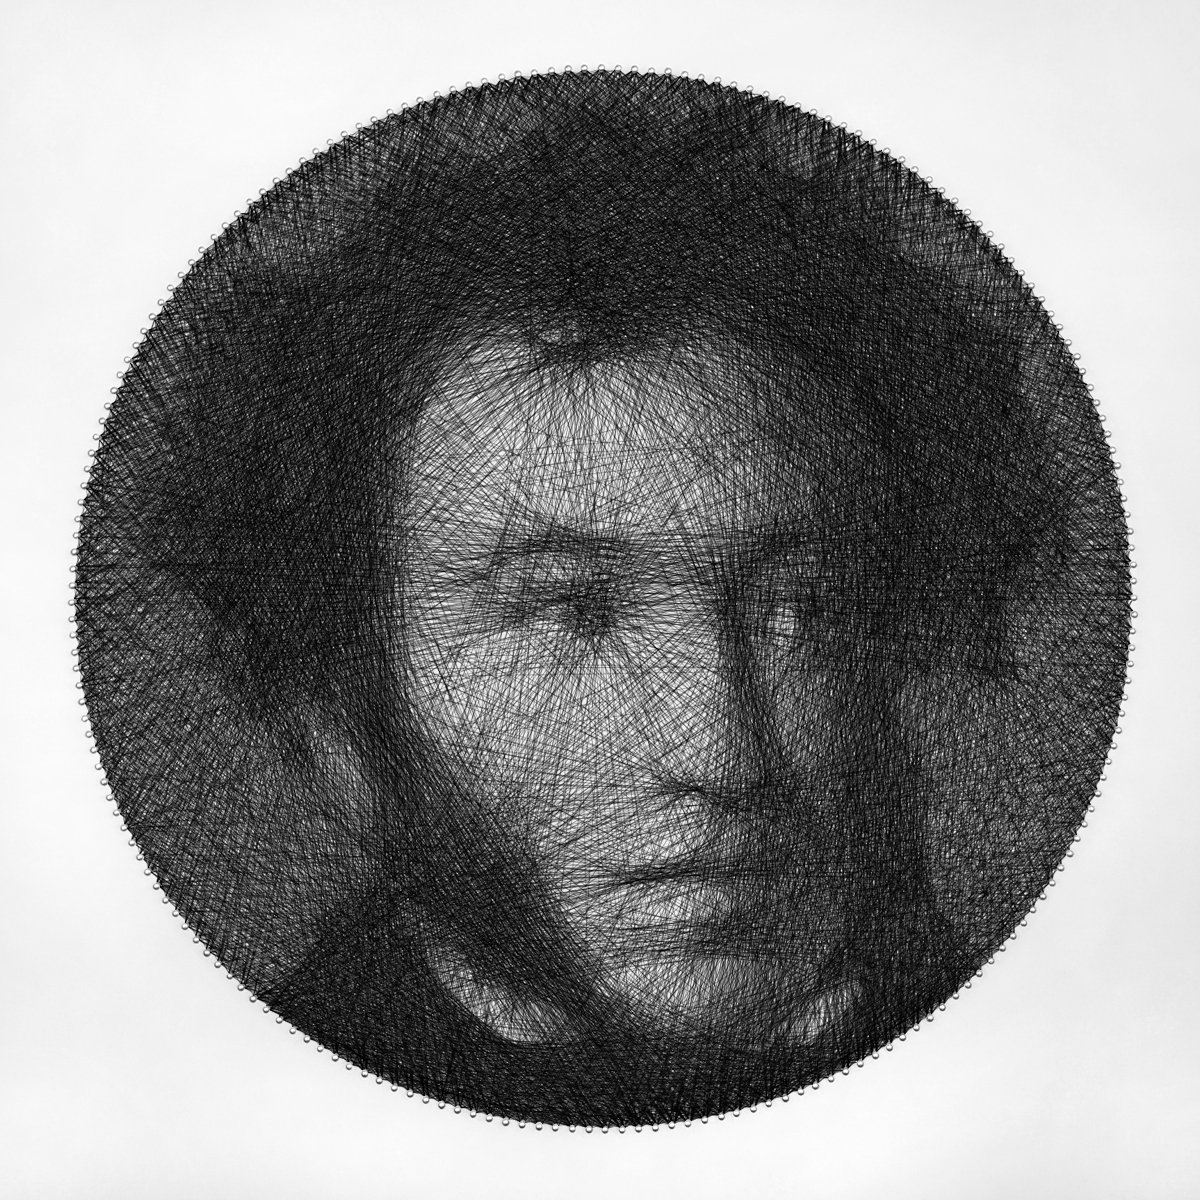 Alexander Pushkin string art portrait by Andrey Saharov